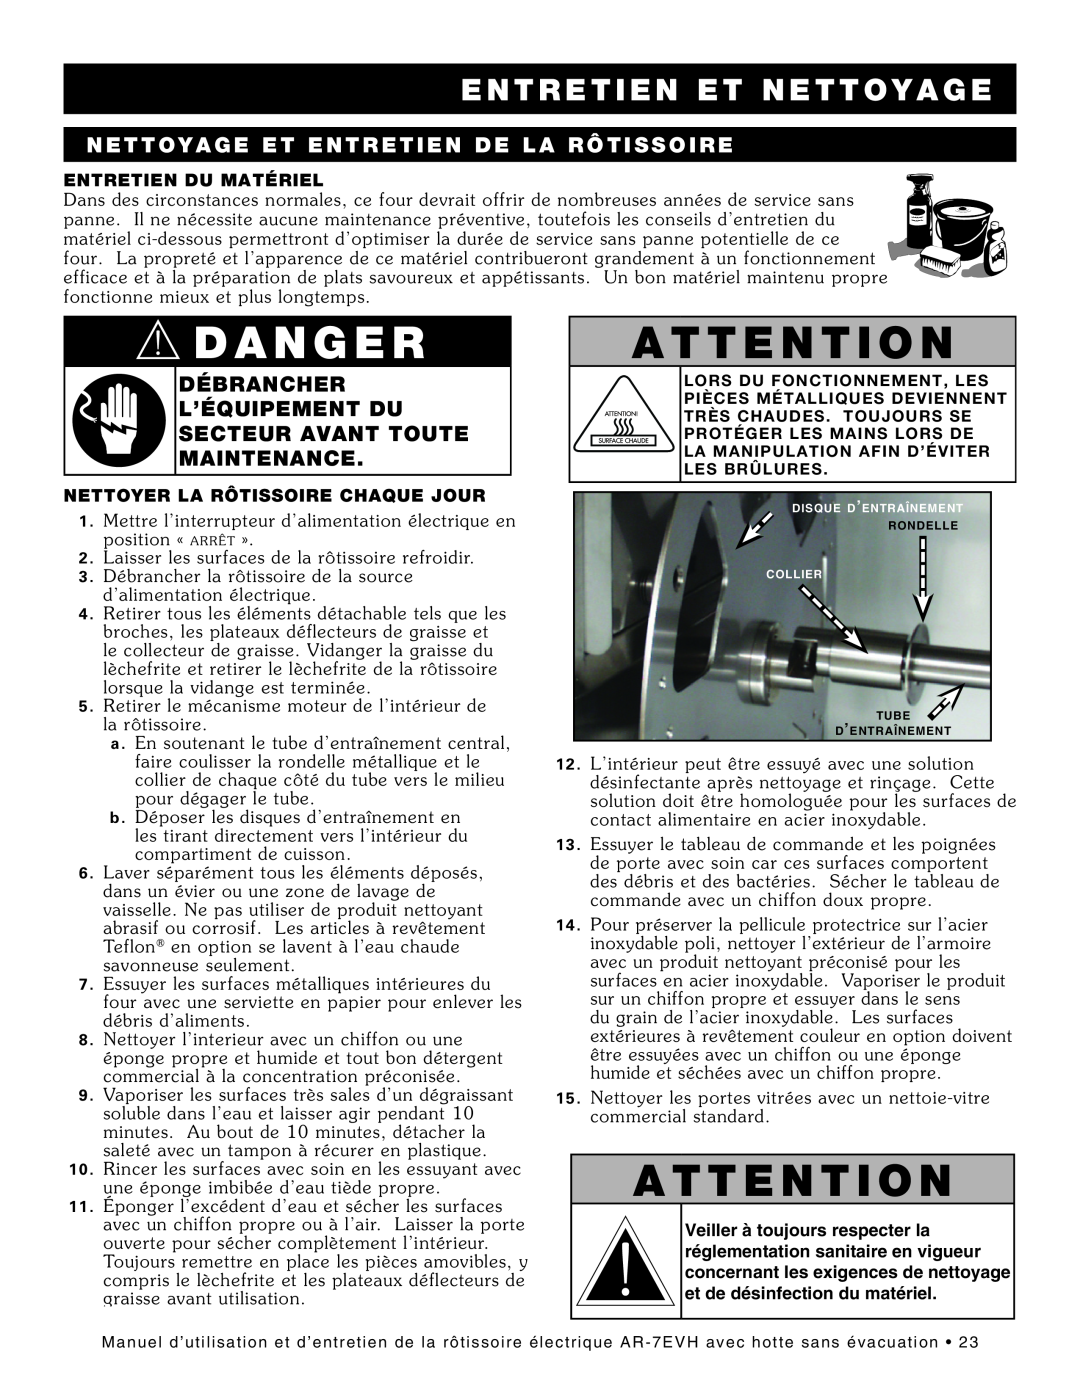 Alto-Shaam ar-7evh manual Nettoyage Et Entretien De La Rôtissoire, Danger, A T T E N T I O N, Entretien Et Nettoyage 